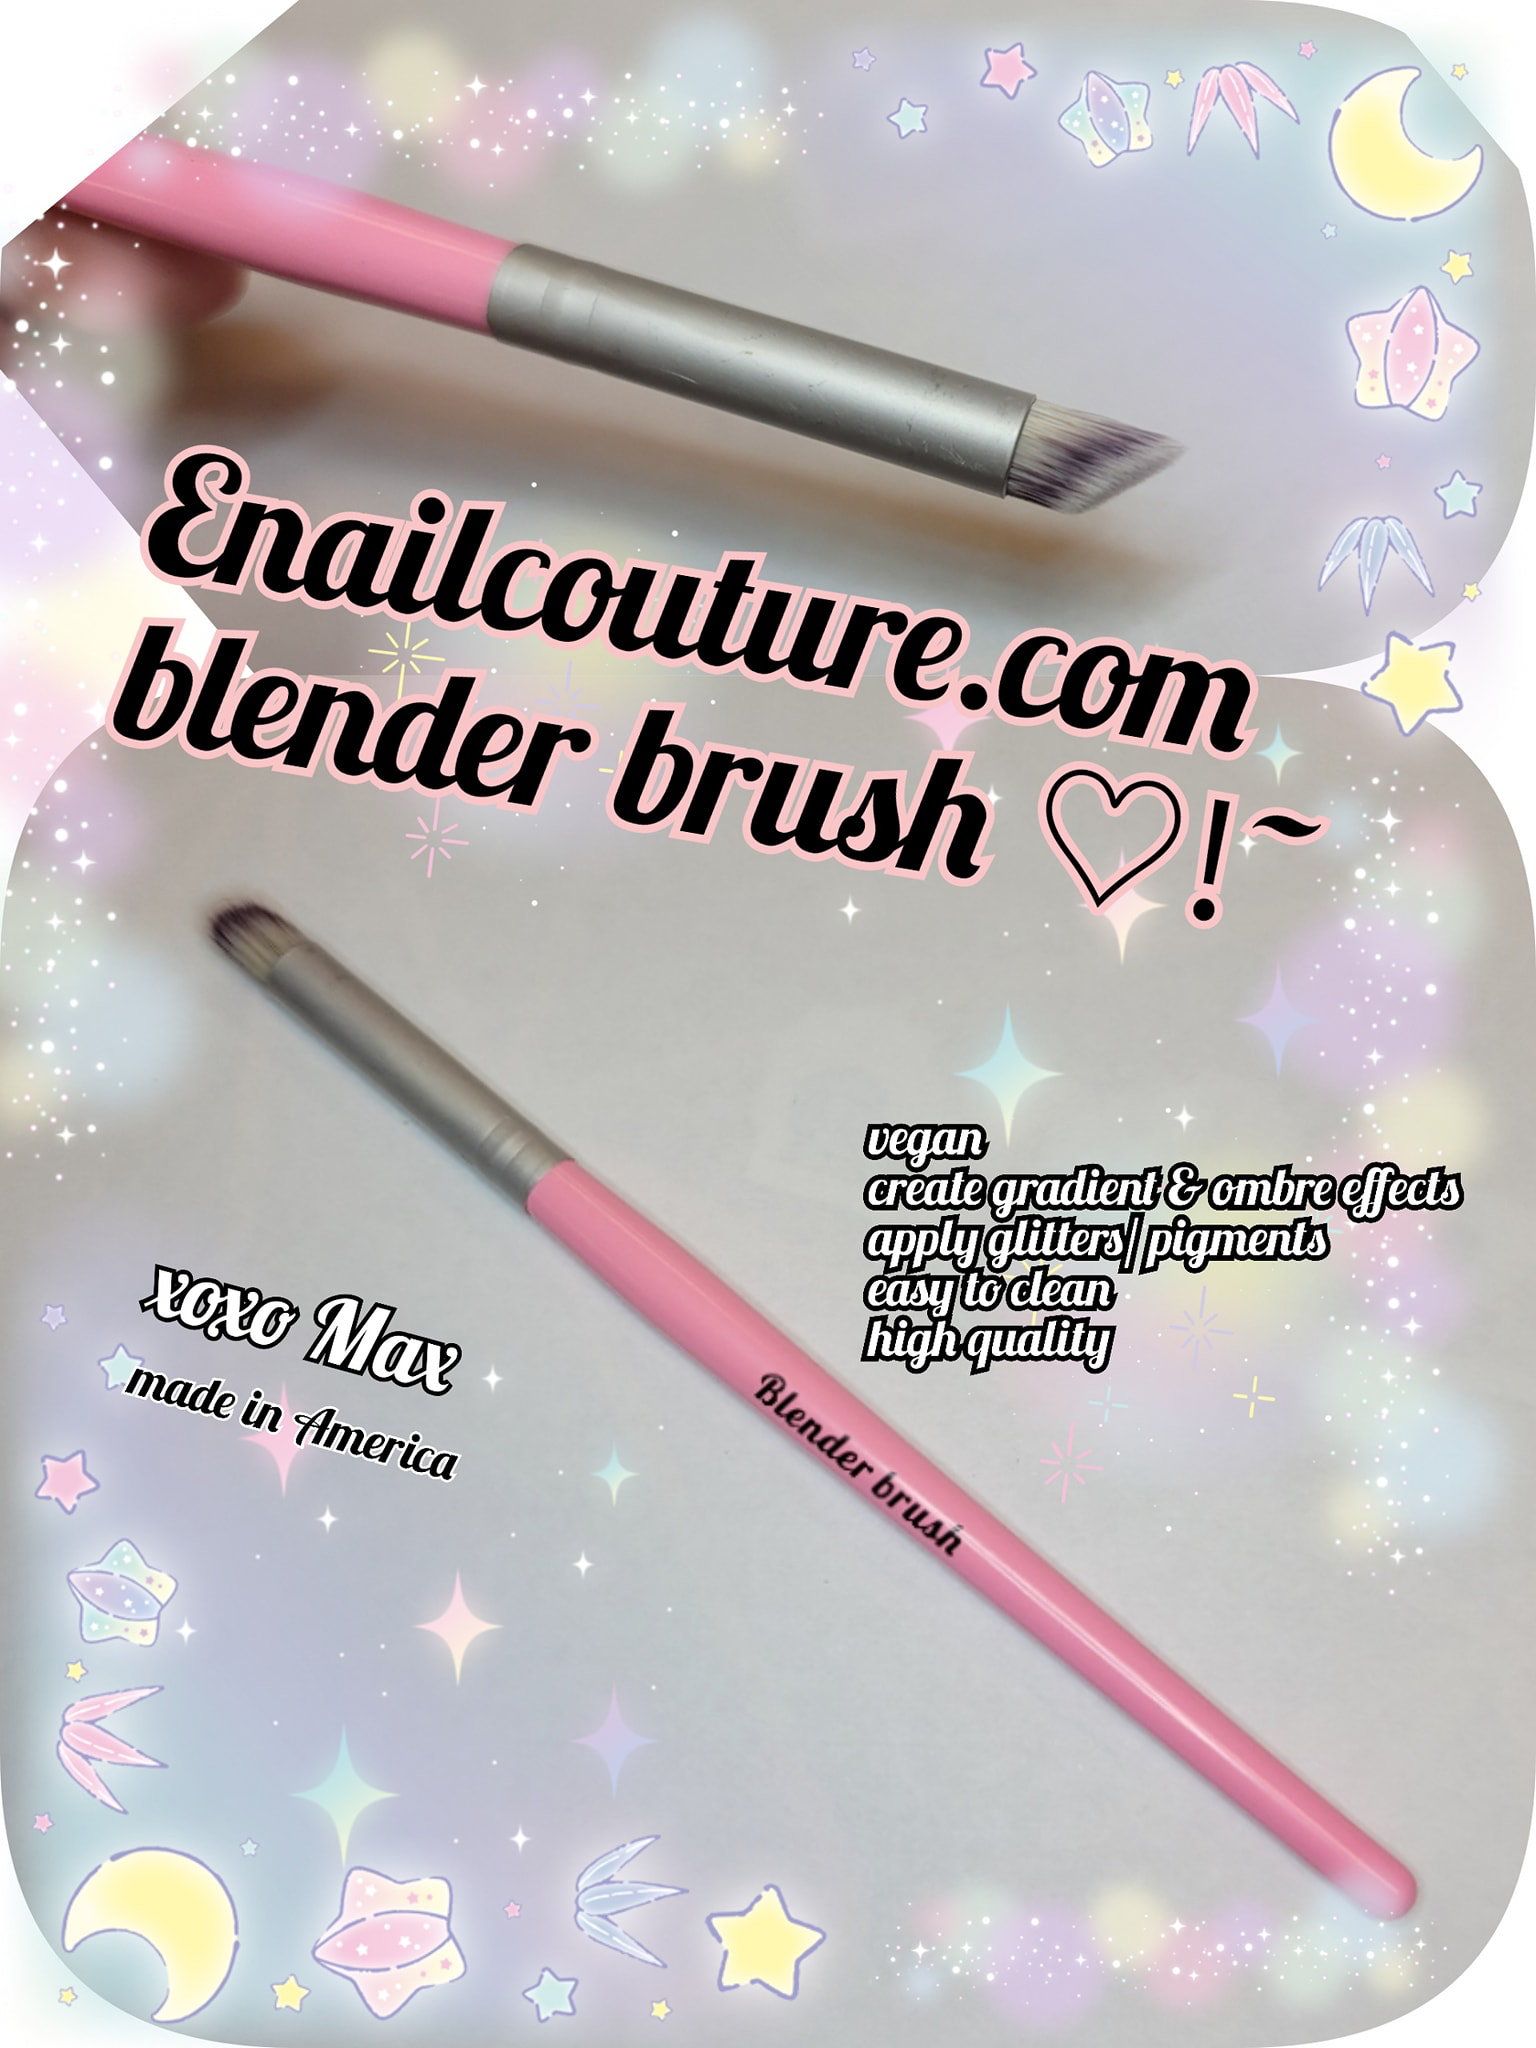 Nail Art Sponge Heads Gradient Brush/ Ombre Shade Maker Pen/ Manicure Nail  Art Tool/ Sponge Nail Art Brush Pen One Set 